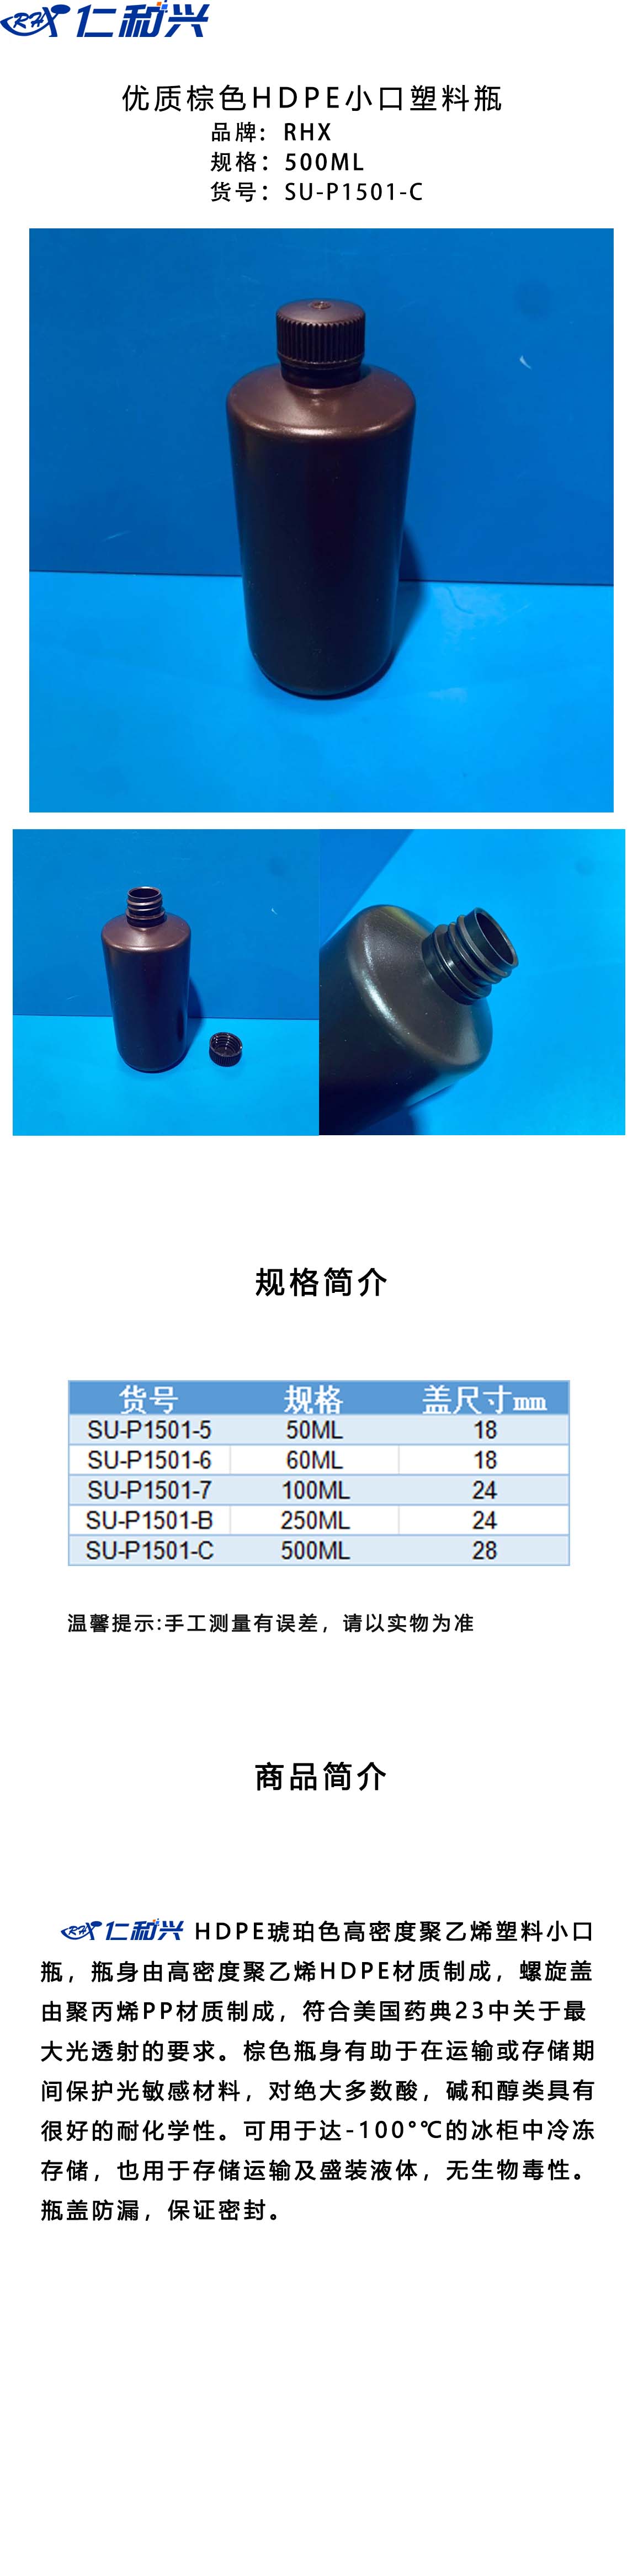 SU-P1501-C 棕色HDPE 小口塑料瓶 长图模板.jpg